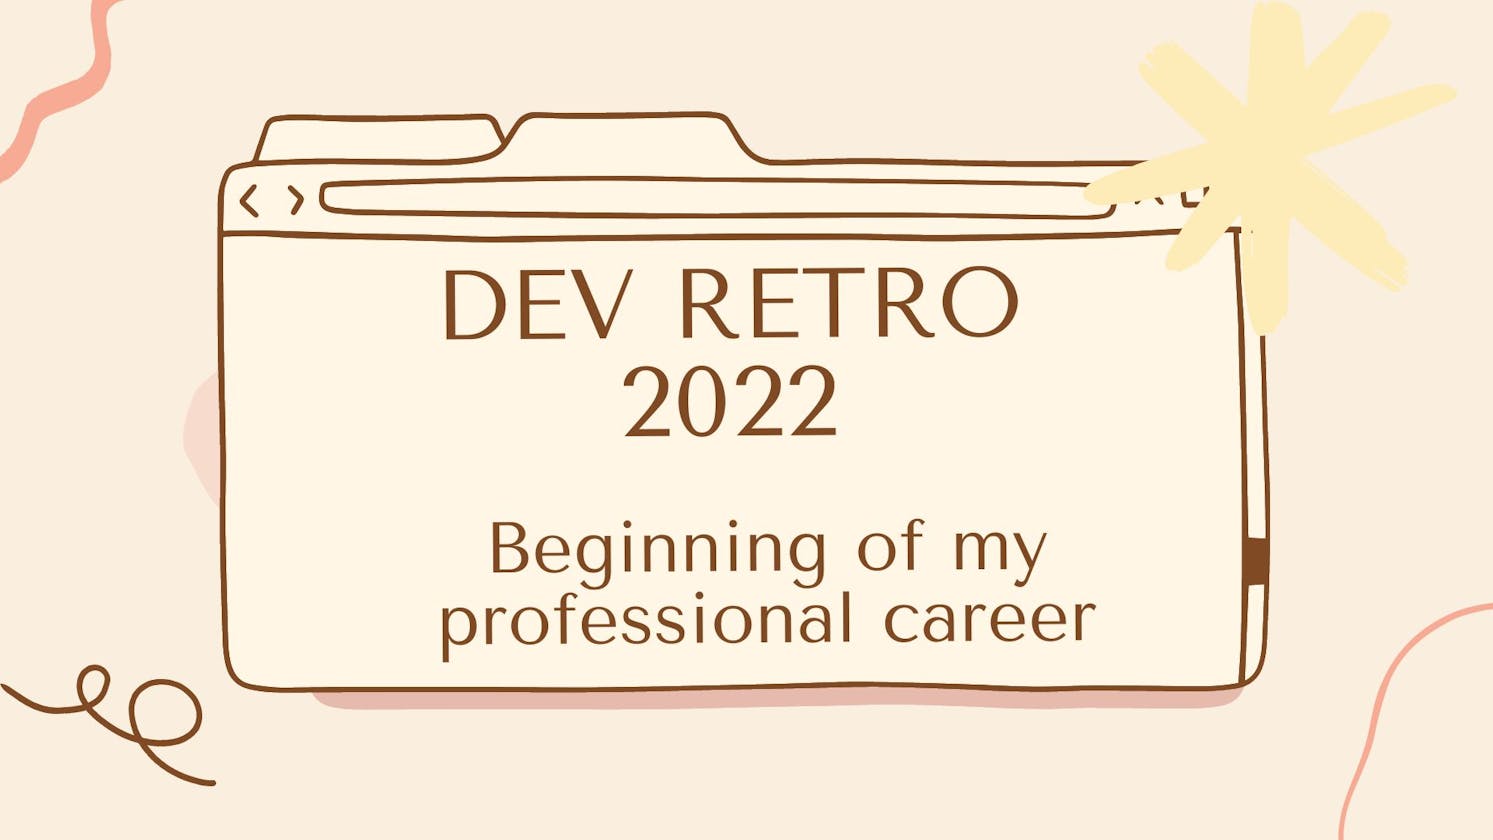 Dev Retro 2022 - Beginning of my professional career